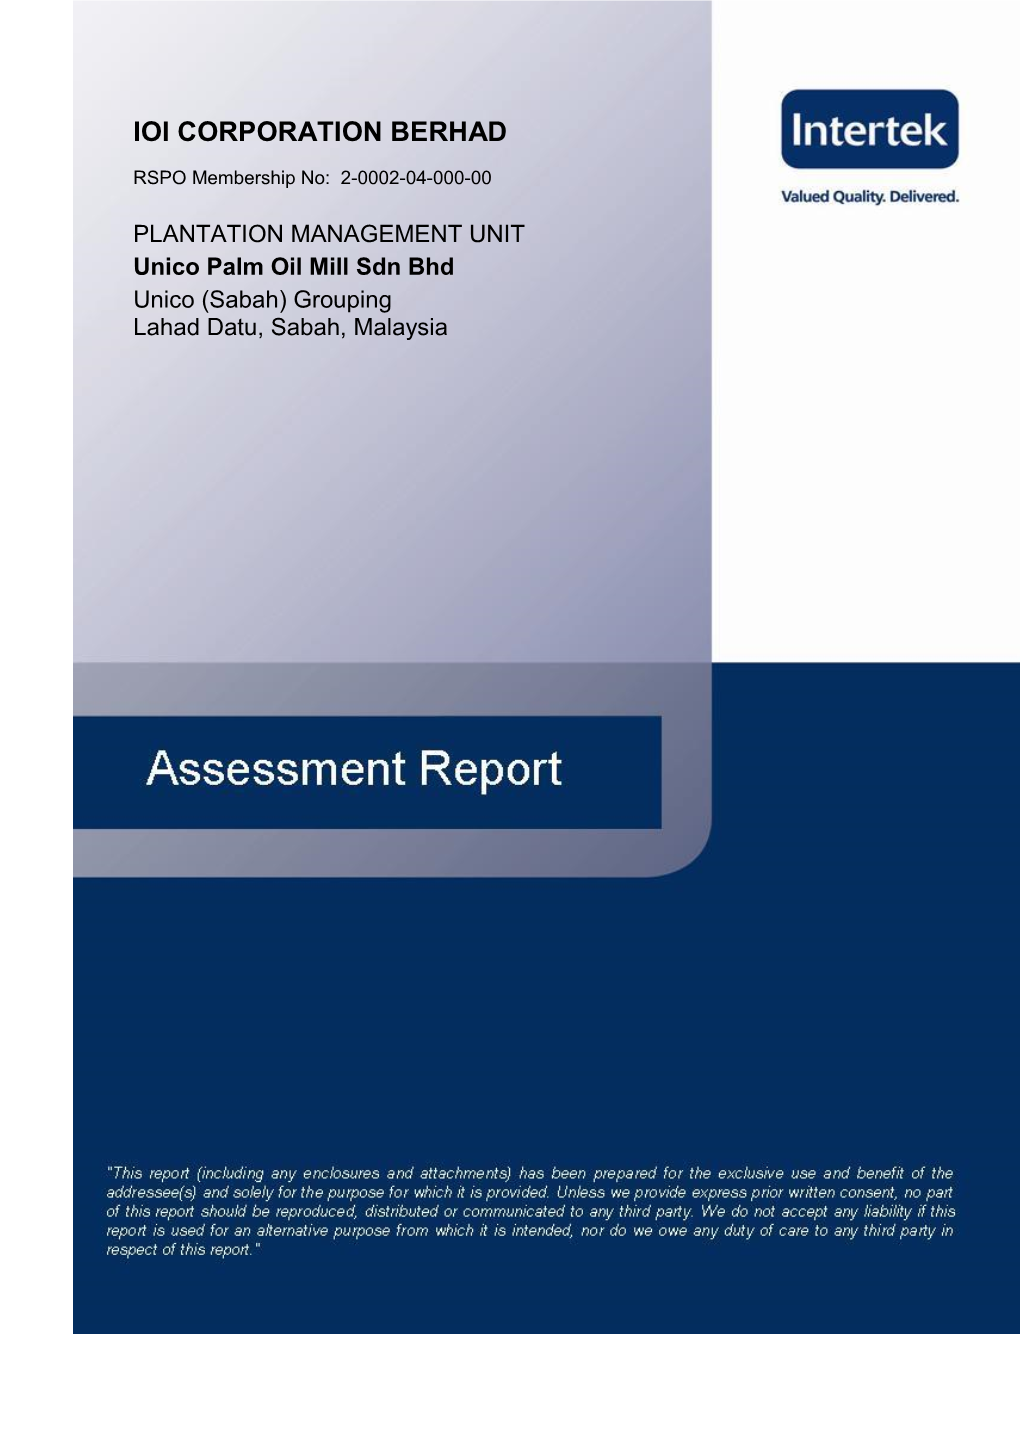 RSPO Public Summary Report